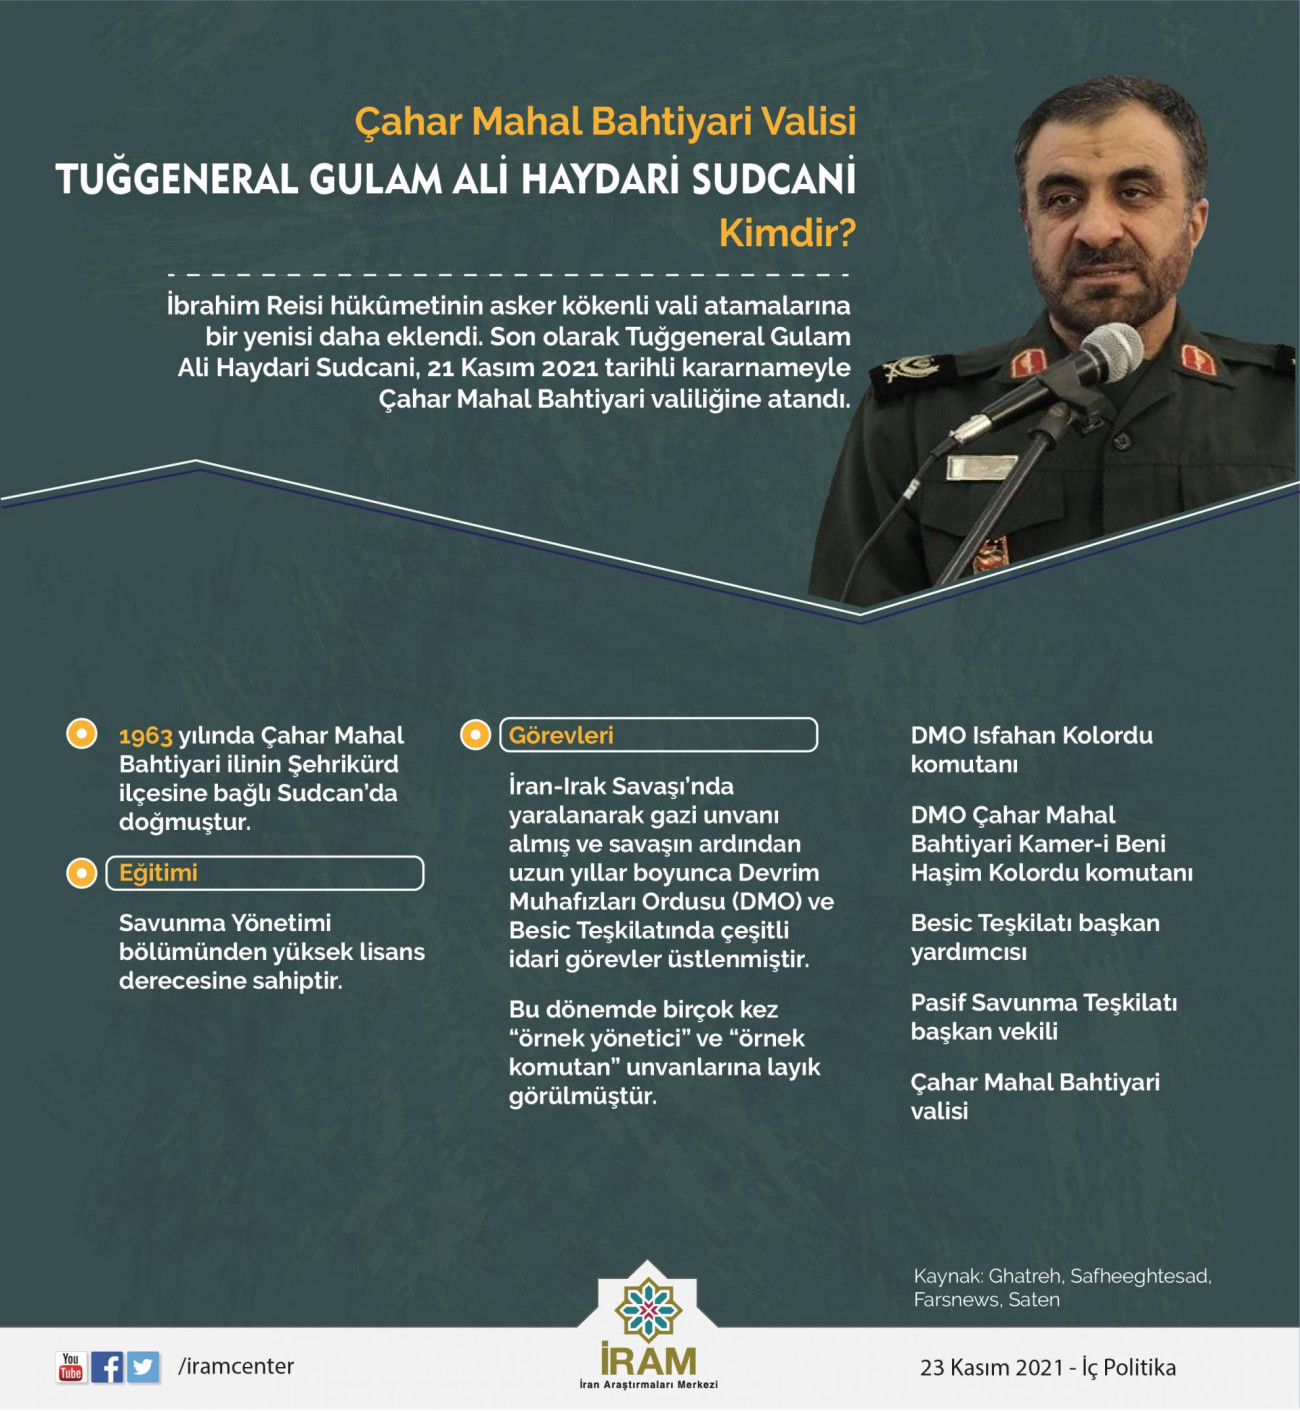 Tuğgeneral Gulam Ali Haydari Sudcani Kimdir?